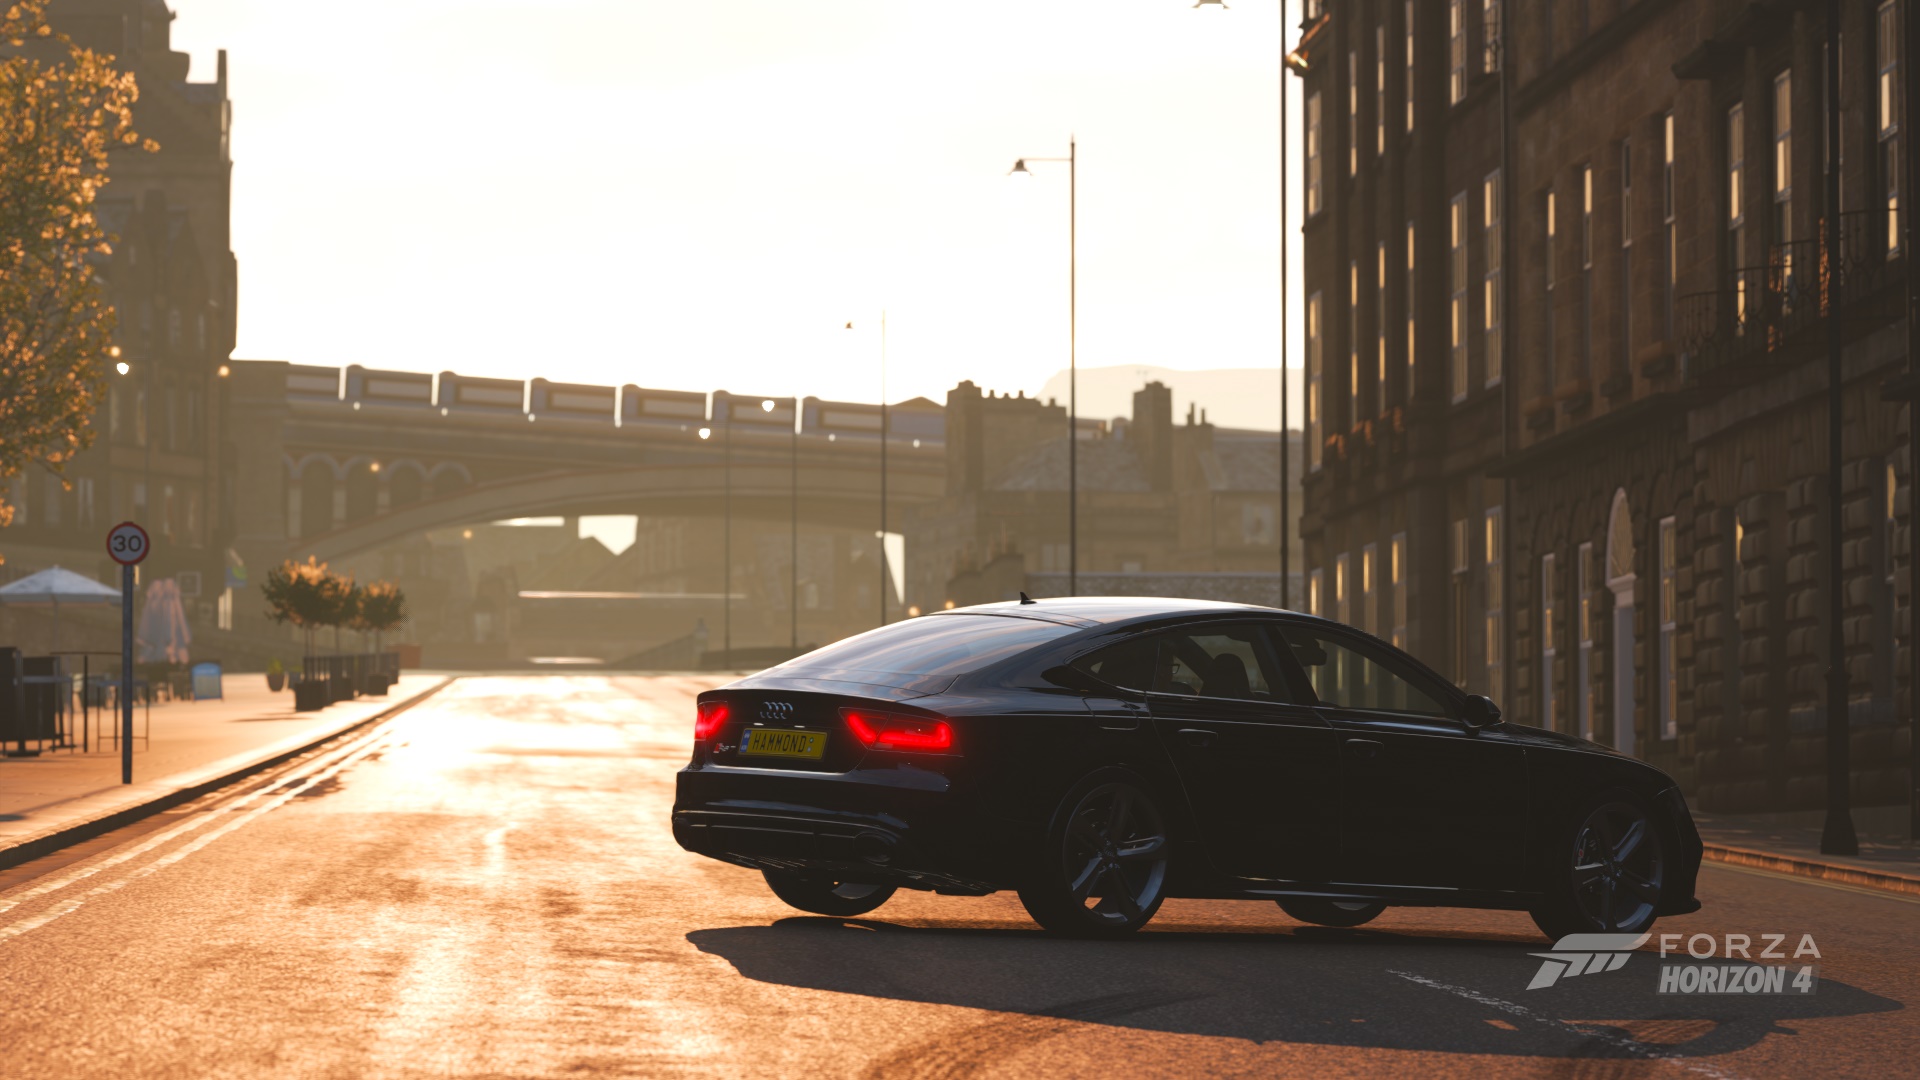 General 1920x1080 Forza Horizon 4 Audi RS7 Audi car video games black cars vehicle Forza screen shot